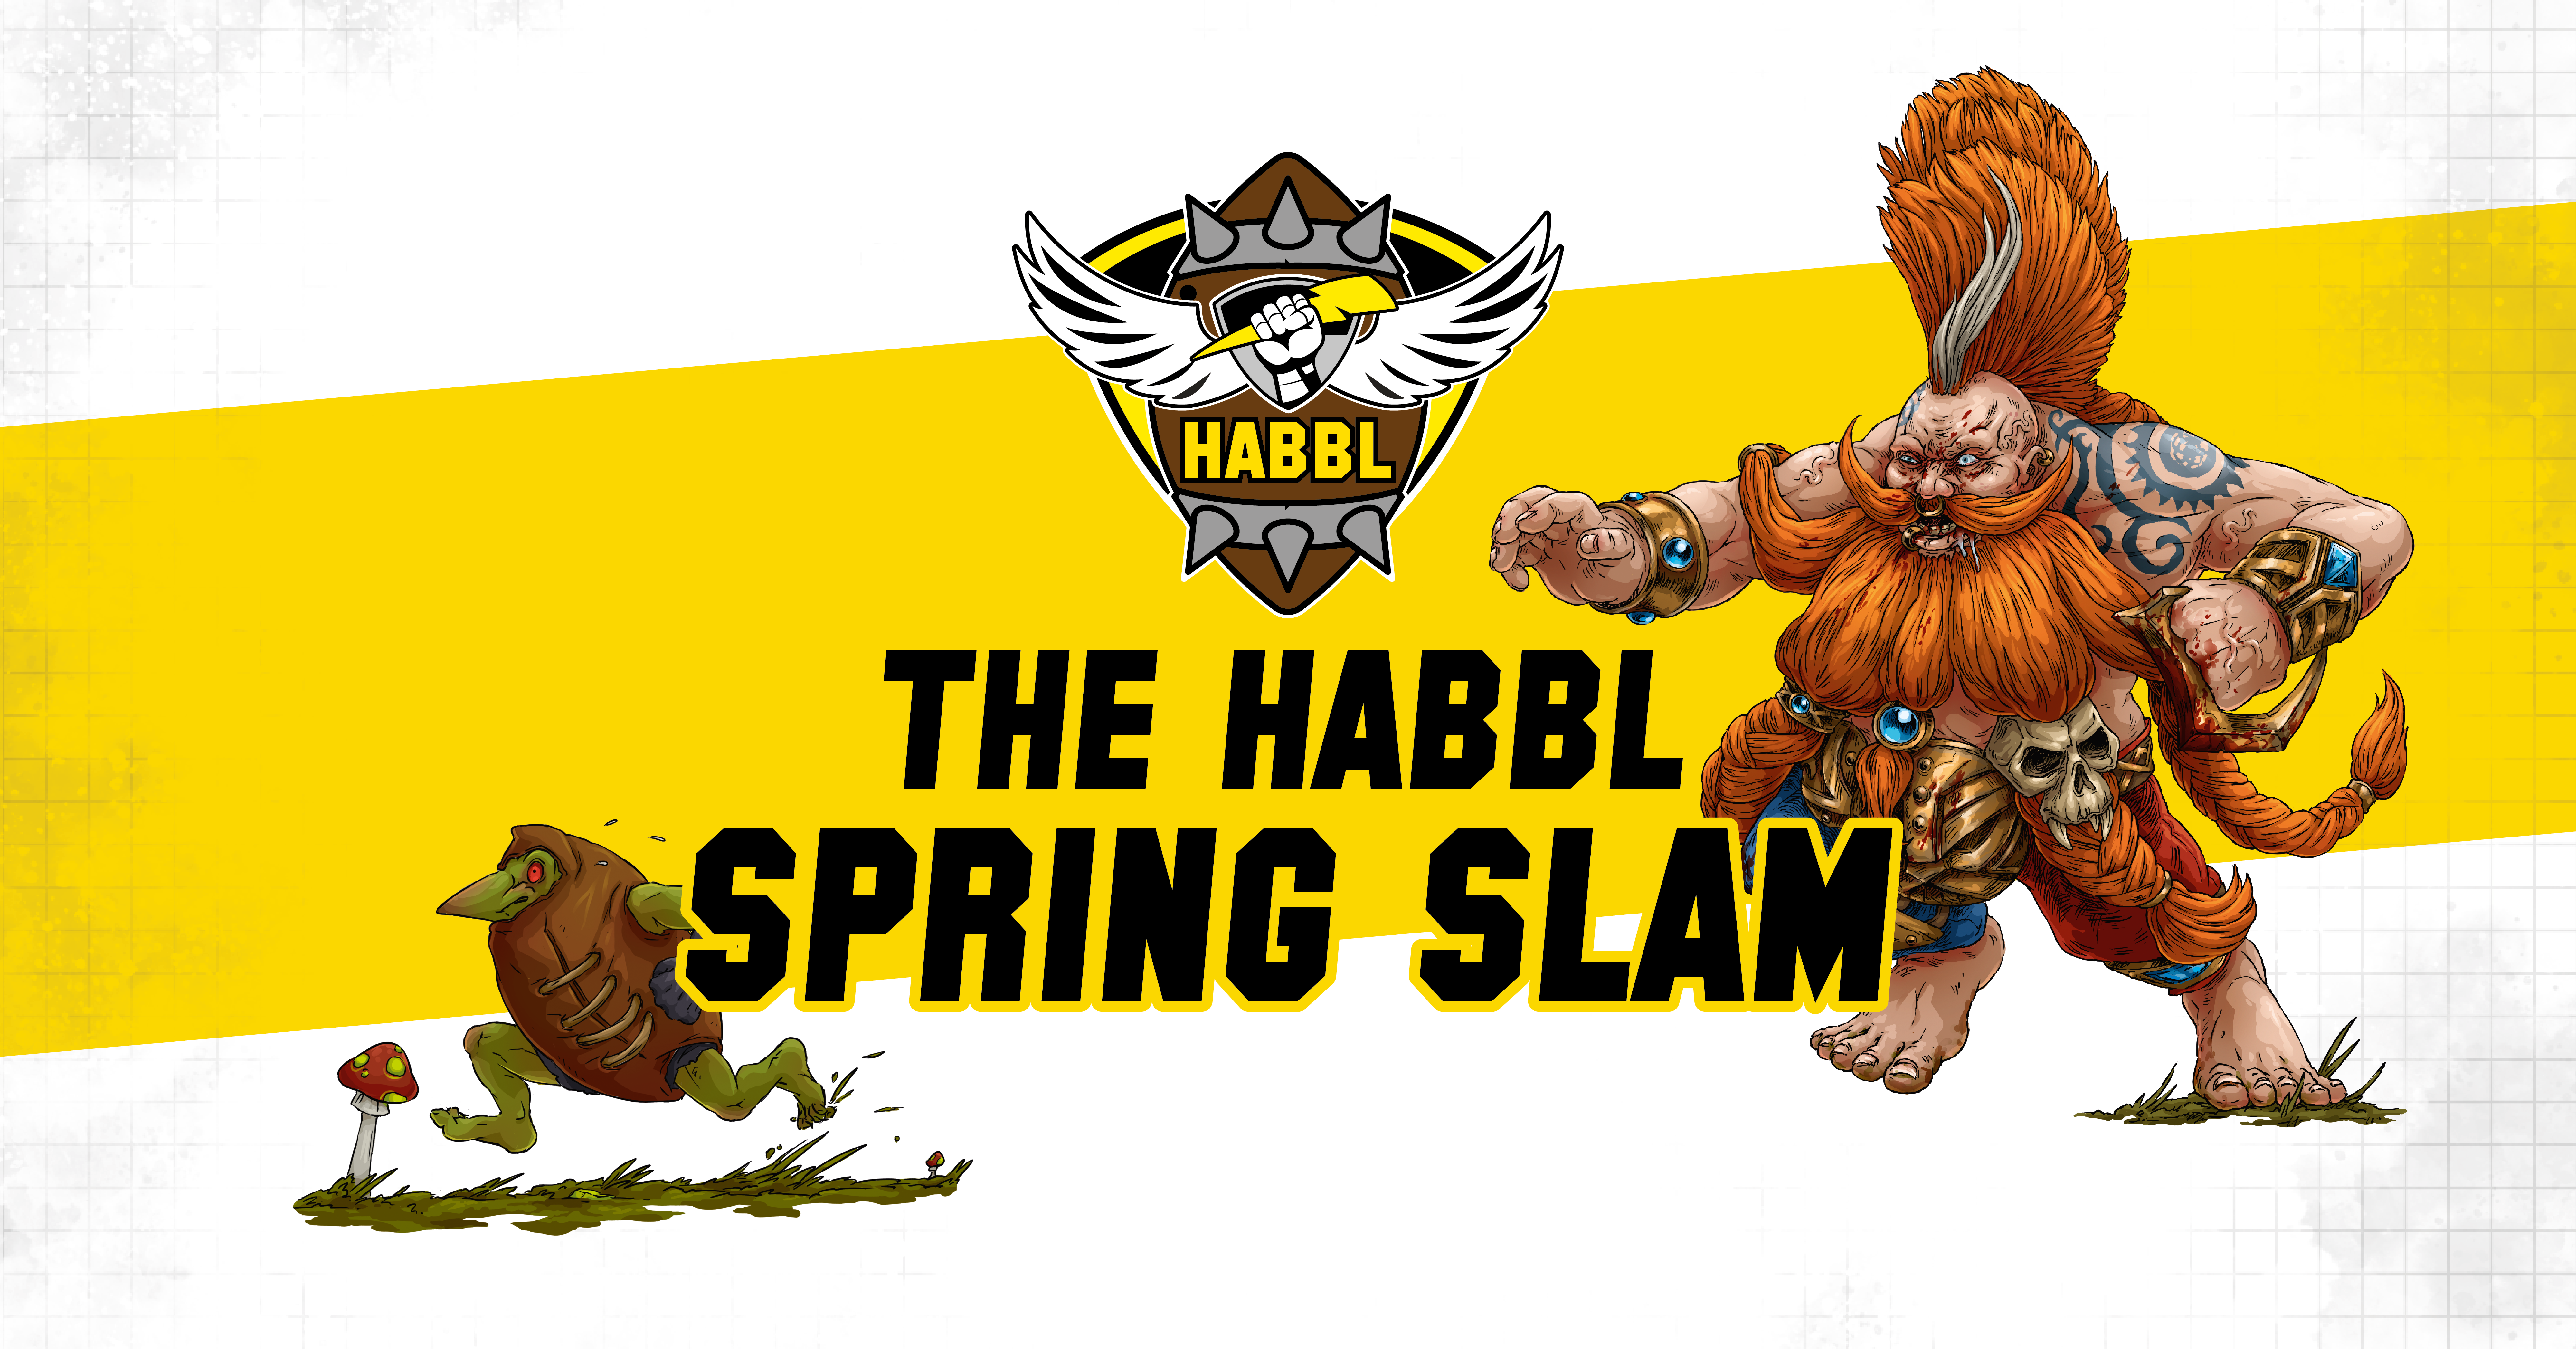 Event Review: HABBL Spring Slam!